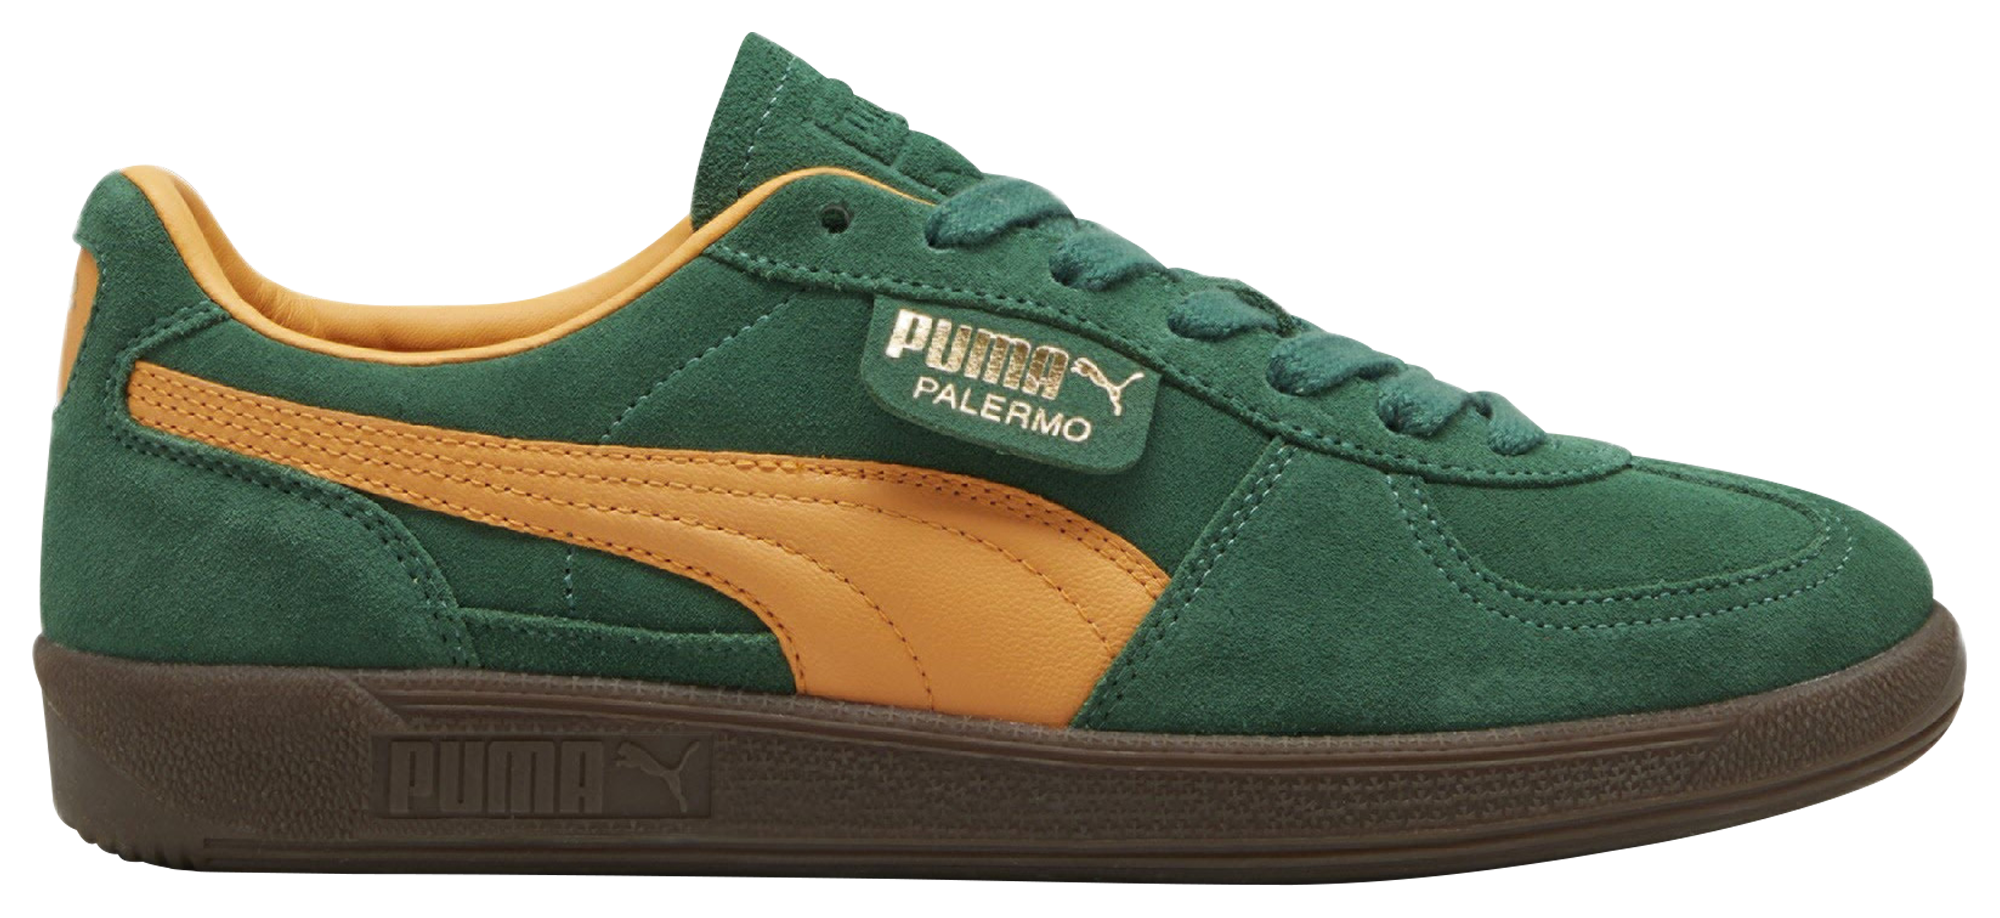 Buy Puma Palermo Unisex Sneakers Shoes - Vine, Foot Locker TH